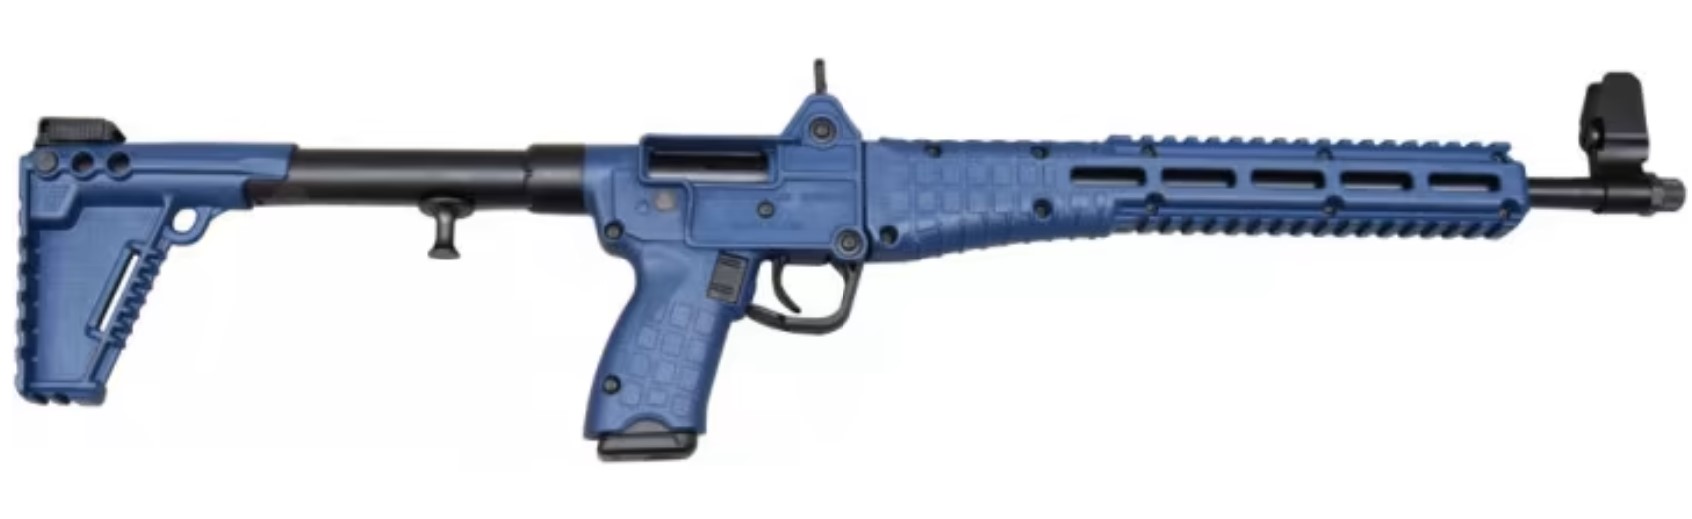 kel-tec-sub-2000-carbine-patriot-brown-9mm-16-barrel-glock-19-15rd